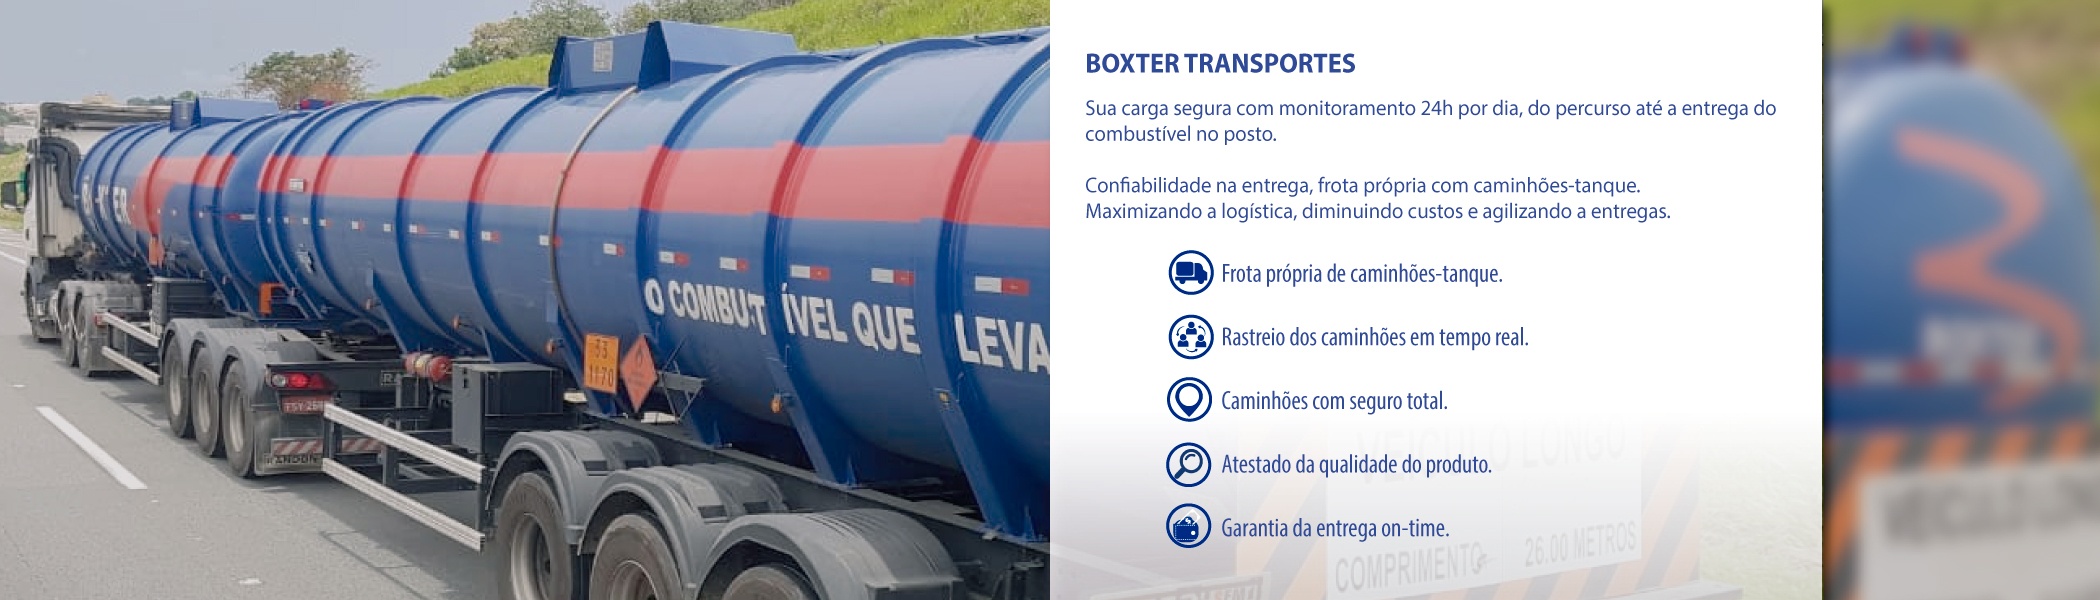 banner-boxter-transporte-222